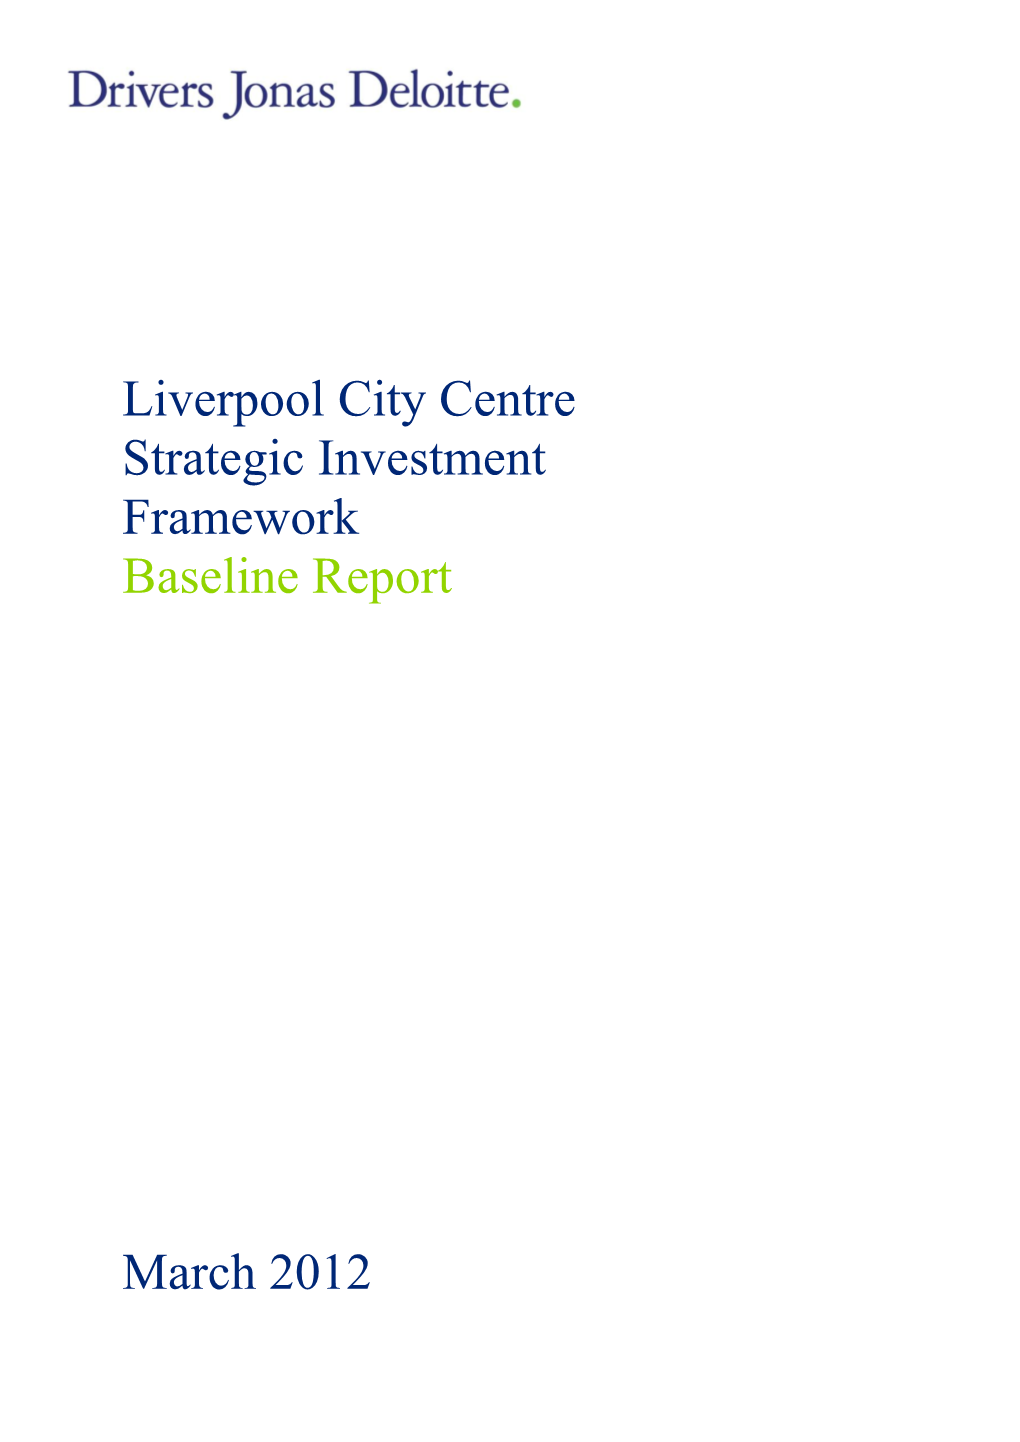 Liverpool City Centre Strategic Investment Framework Baseline Report